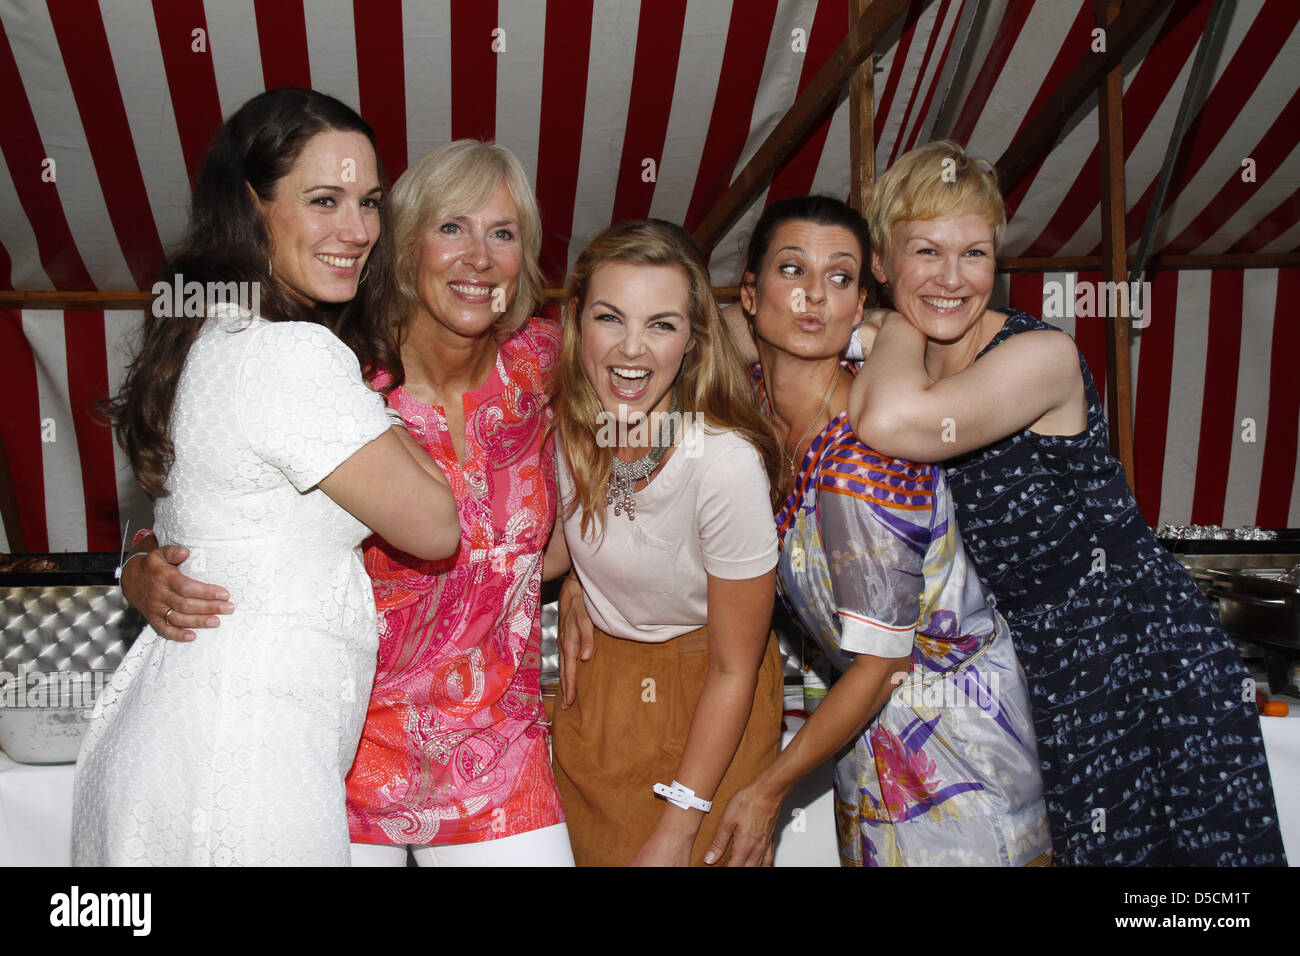 Simone Panteleit, Gaby Papenburg, Annika Kipp, Marlene Lufen and Karen Heinrichs at the evening barbecue of 'Sat 1 Stock Photo